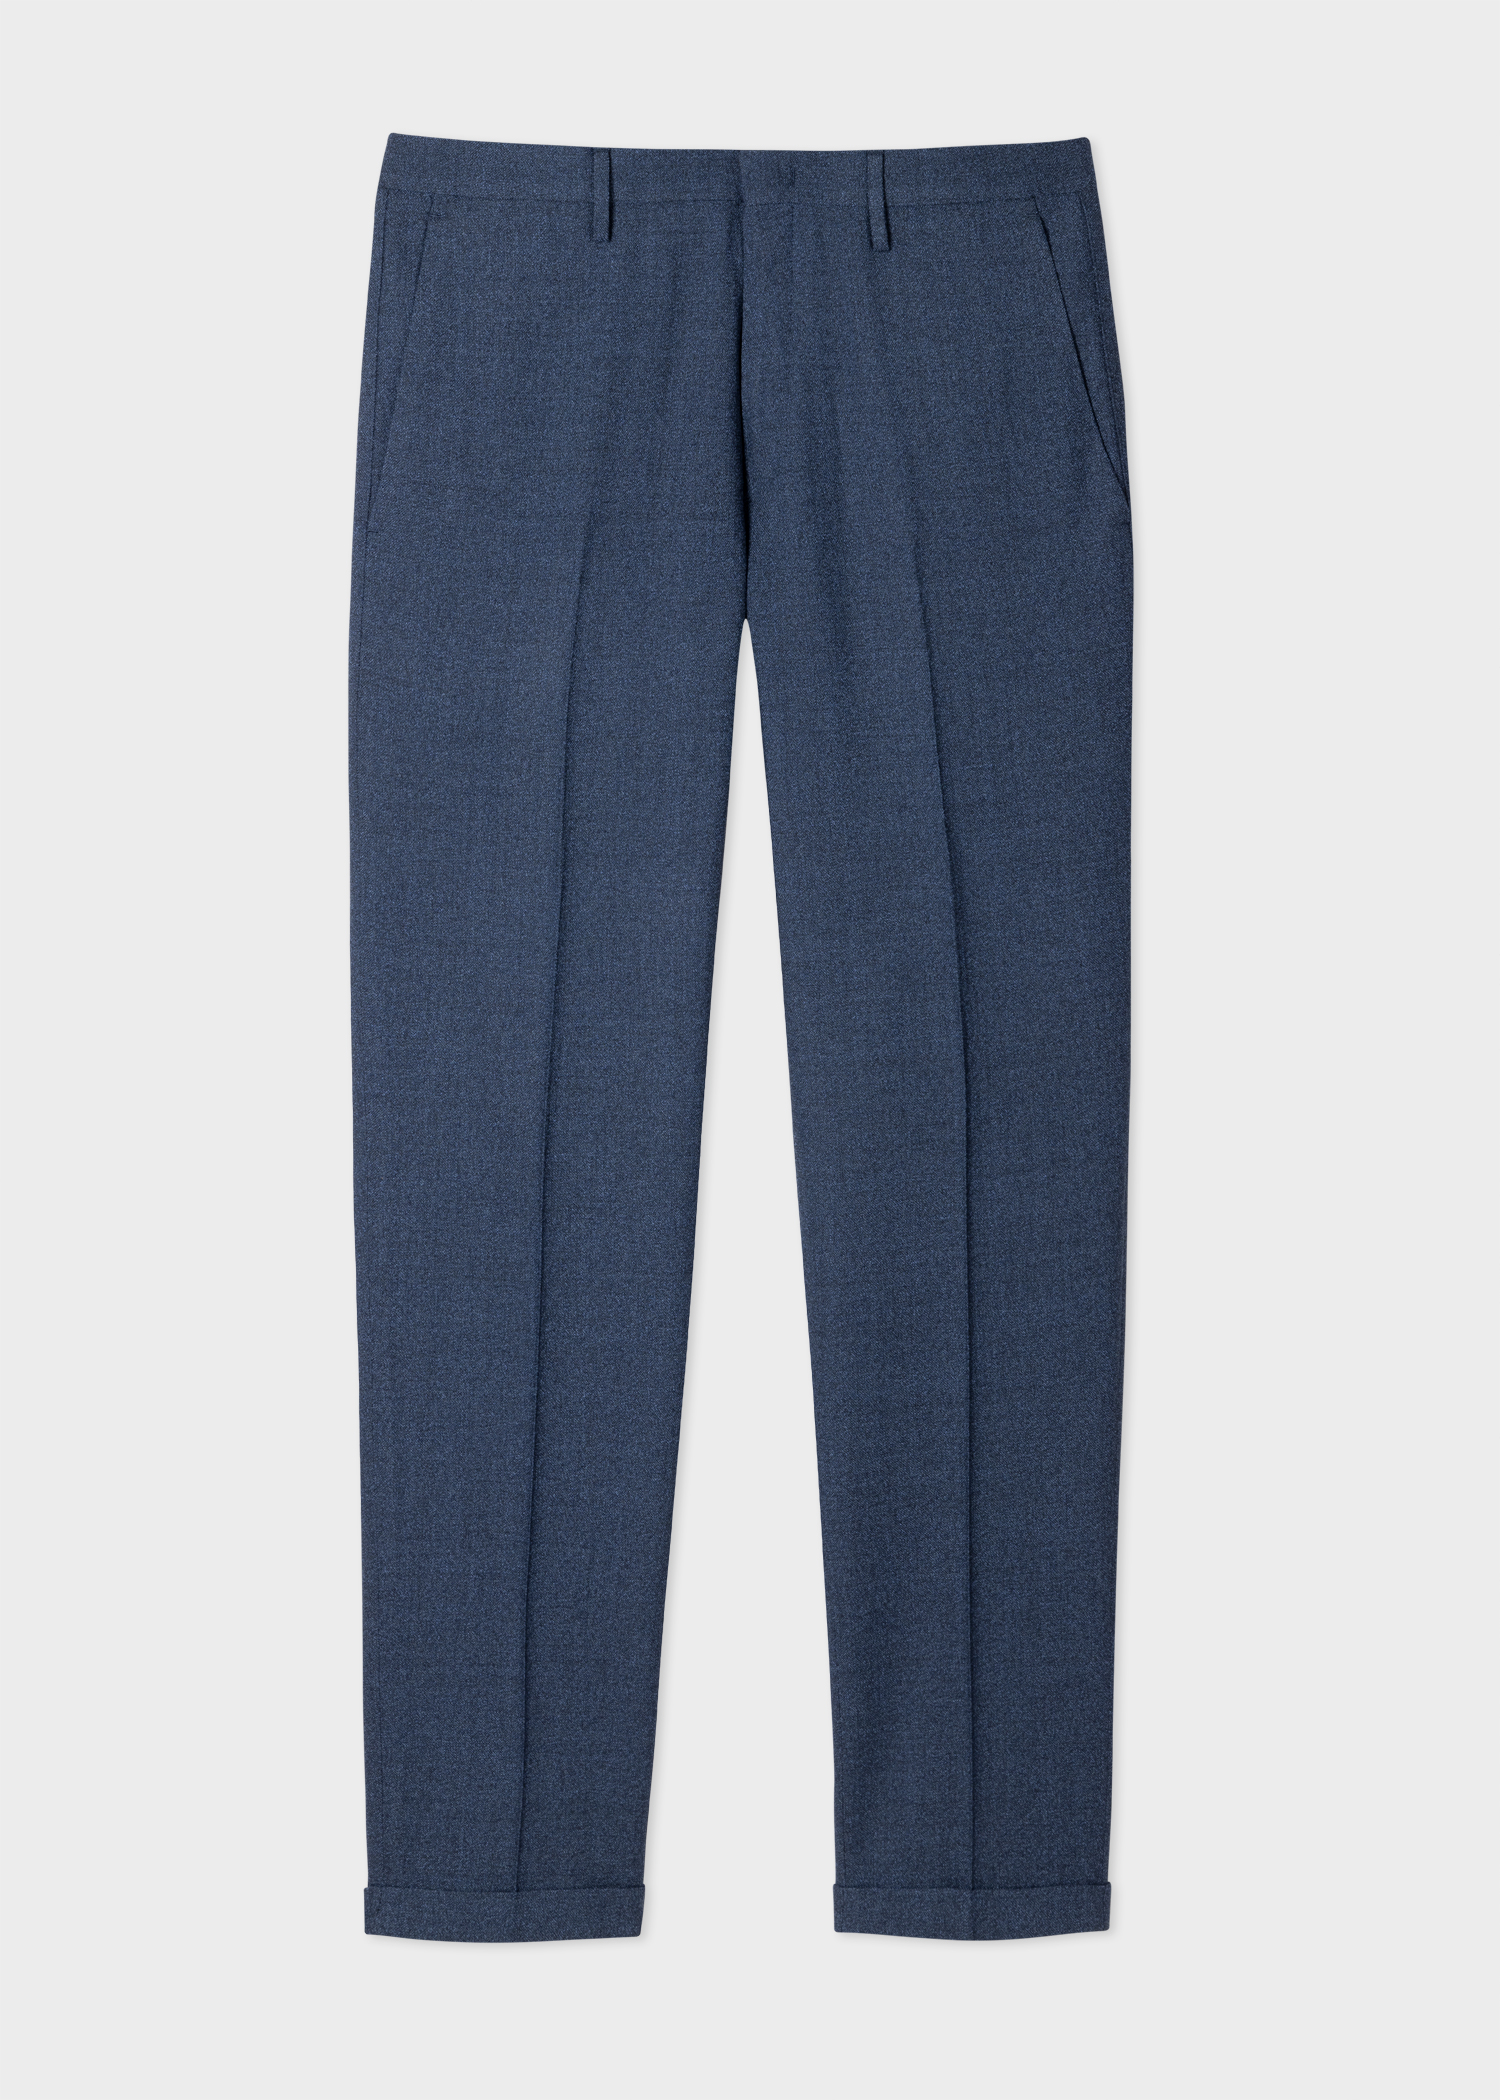 Designer Tailored Trousers for Men | Paul Smith